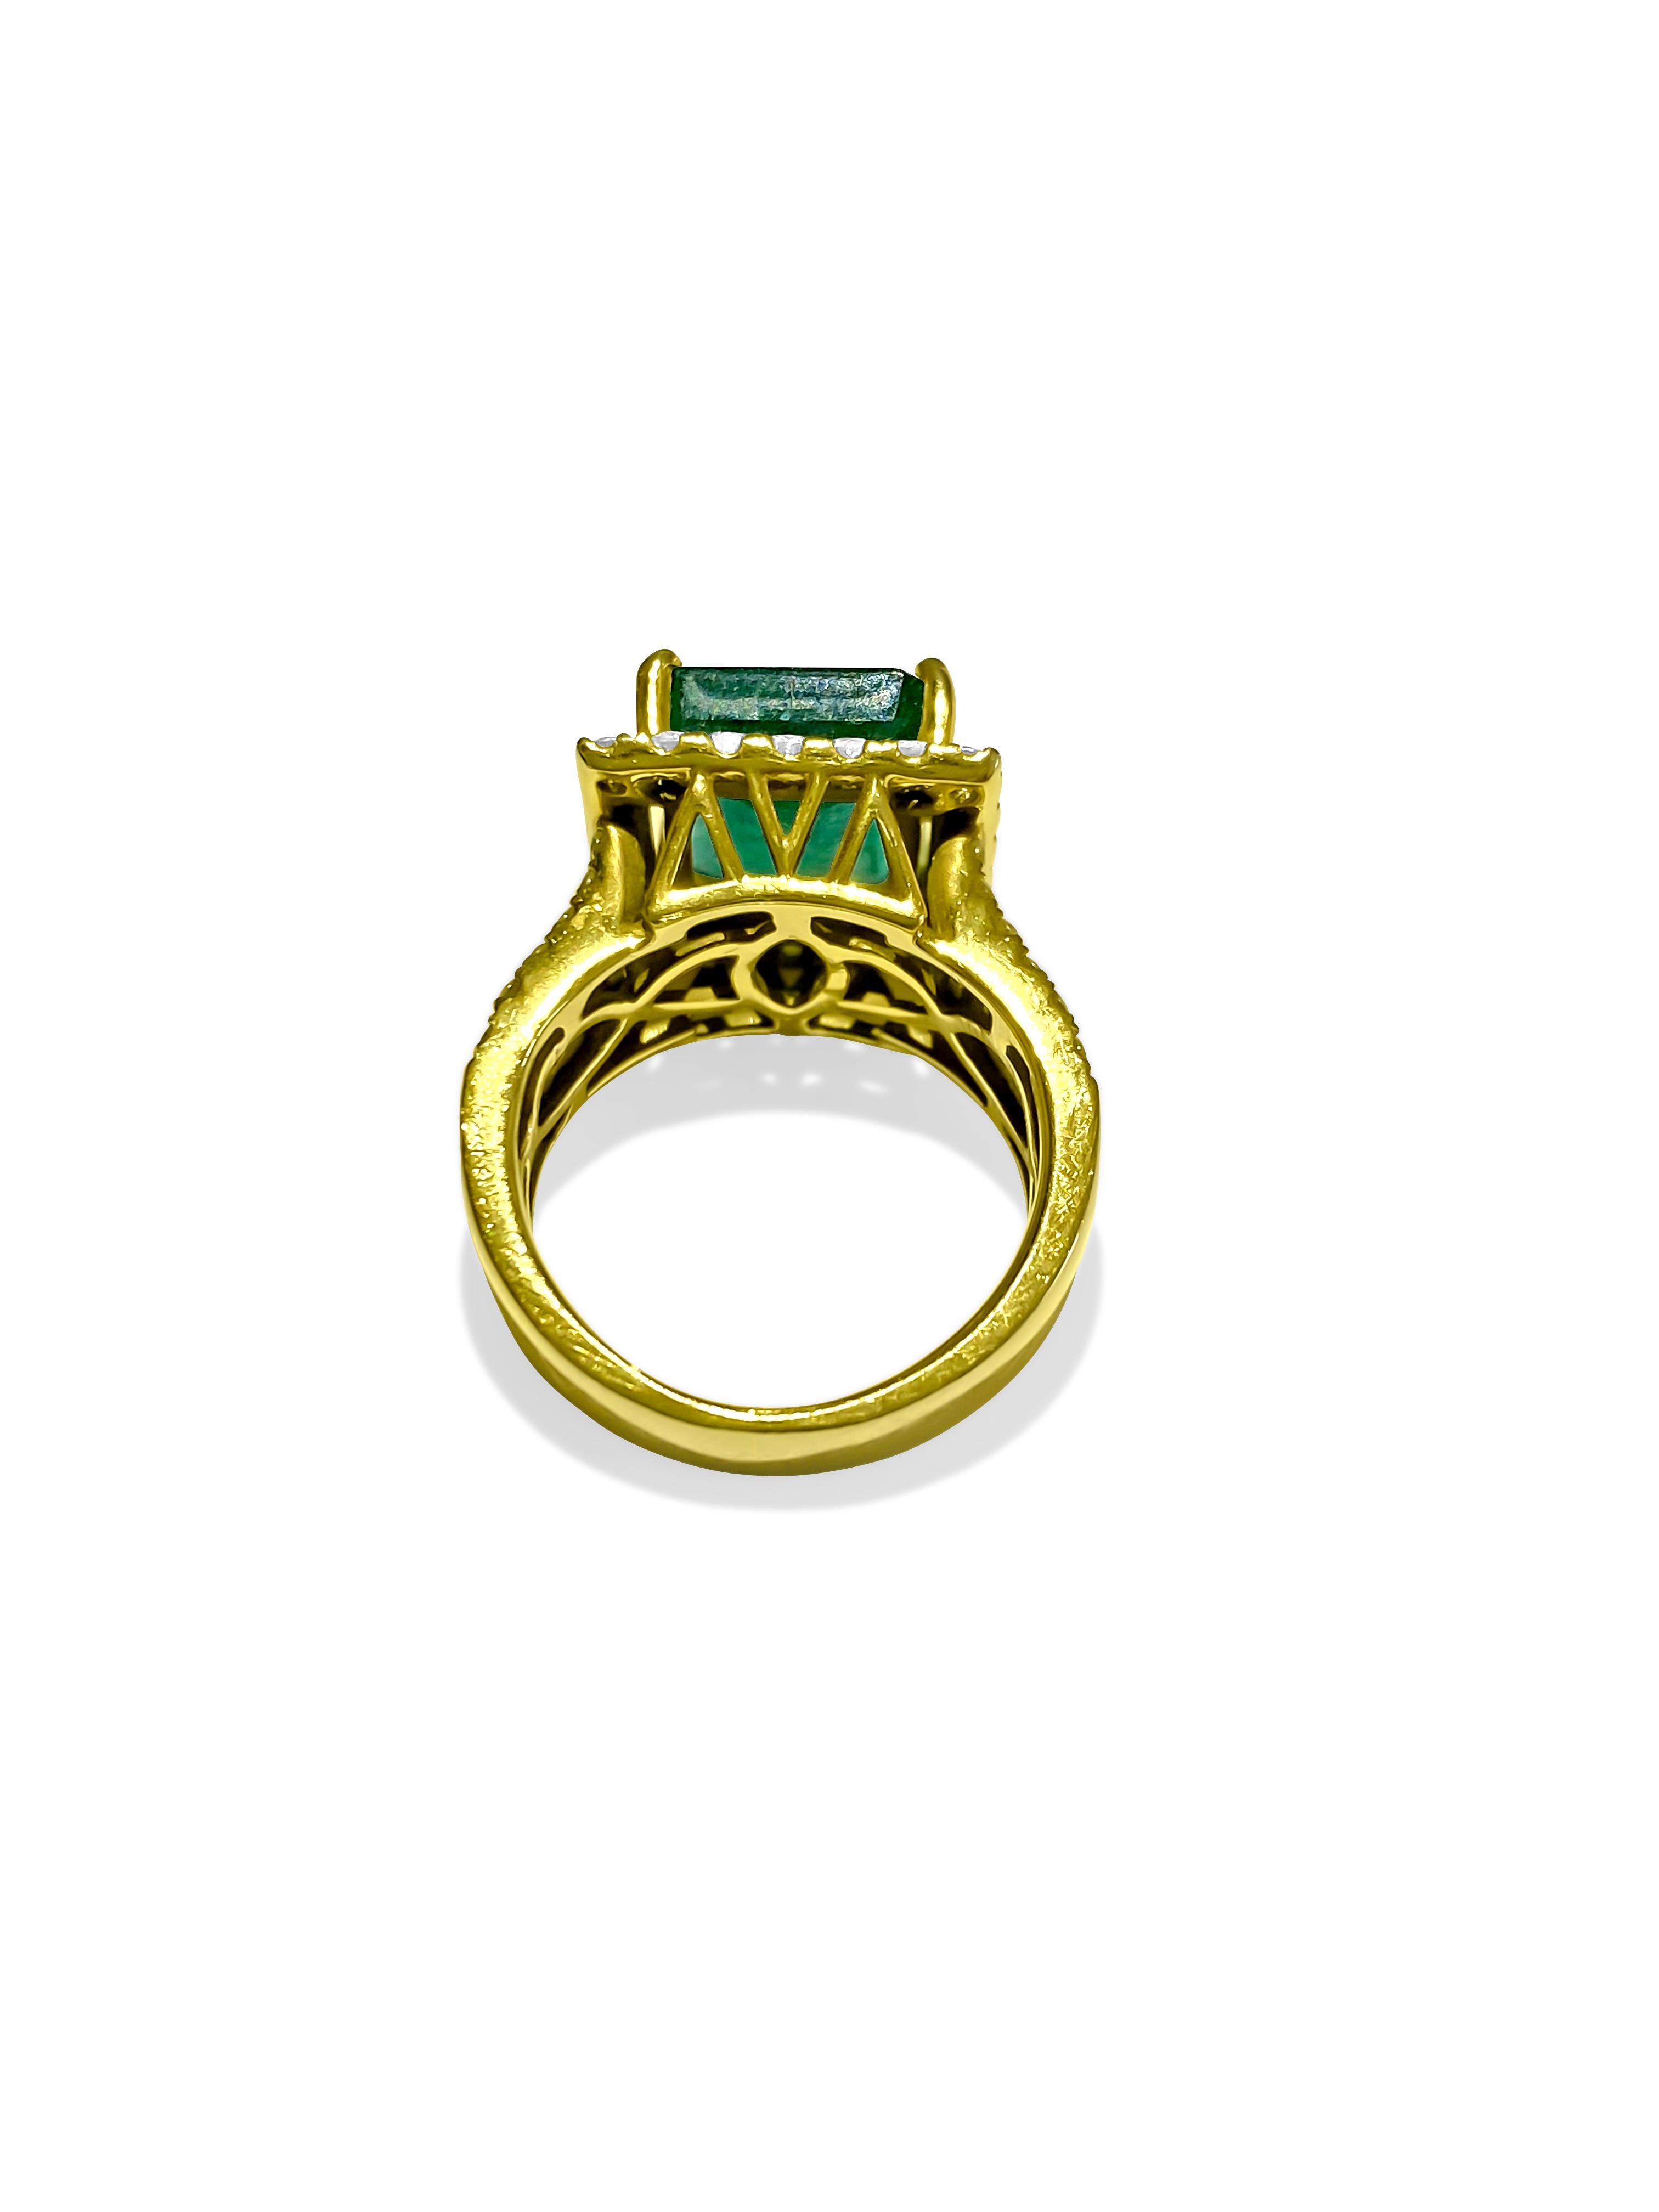 Emerald Cut Contemporary 7.50 Carat Diamond Emerald Ring. For Sale